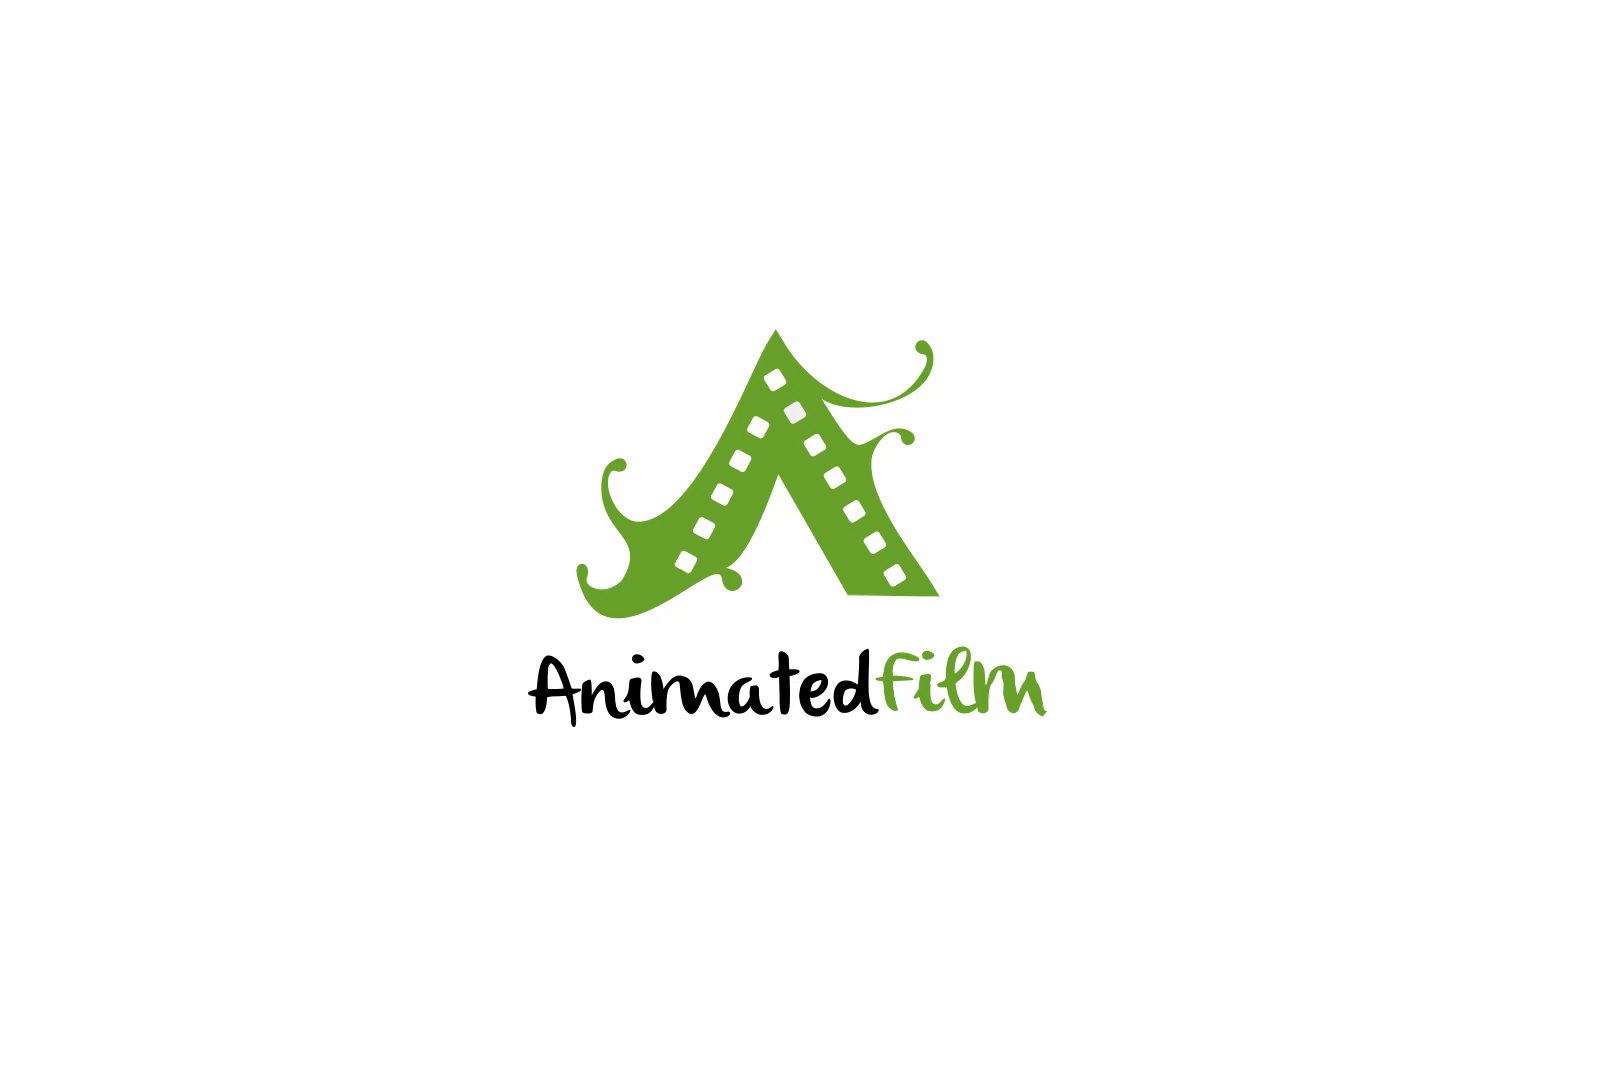 Animated film logo motion by Farzin Kazemian on Dribbble